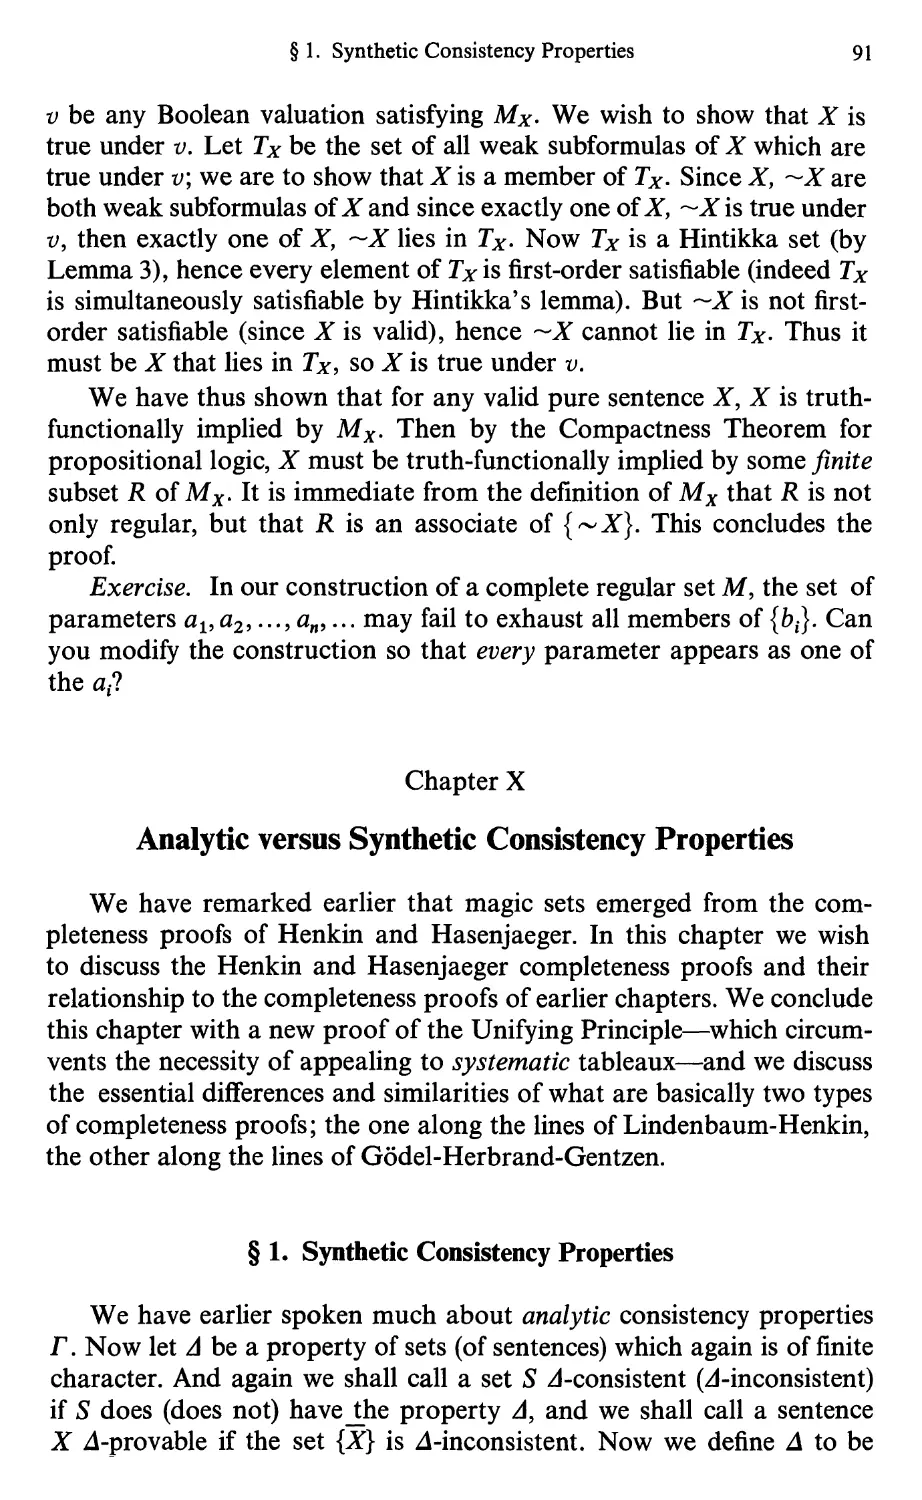 10 Analytic versus Synthetic Consistency Properties